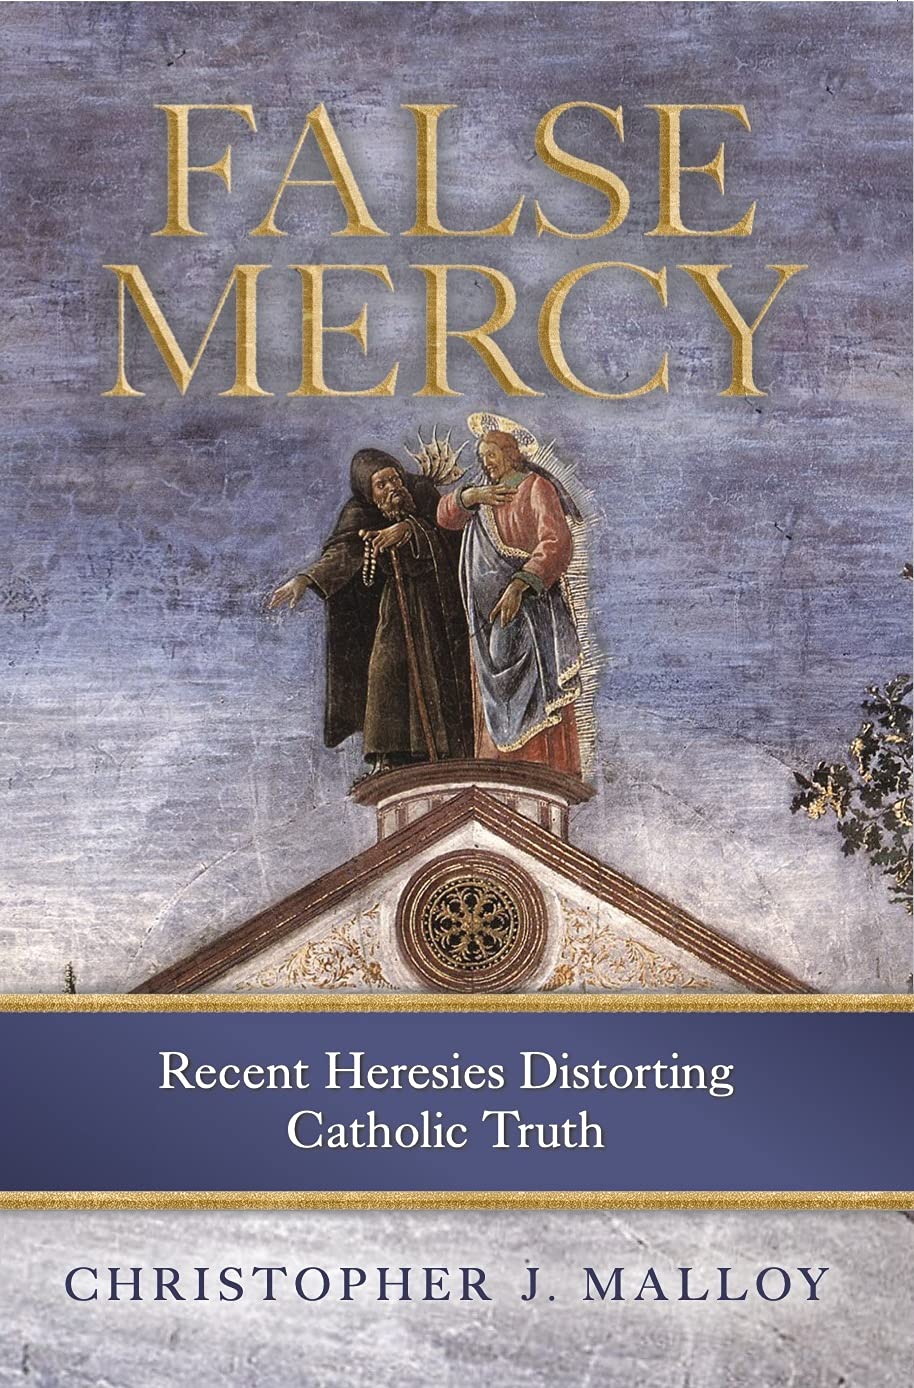 False Mercy: Recent Heresies Distorting Catholic Truth